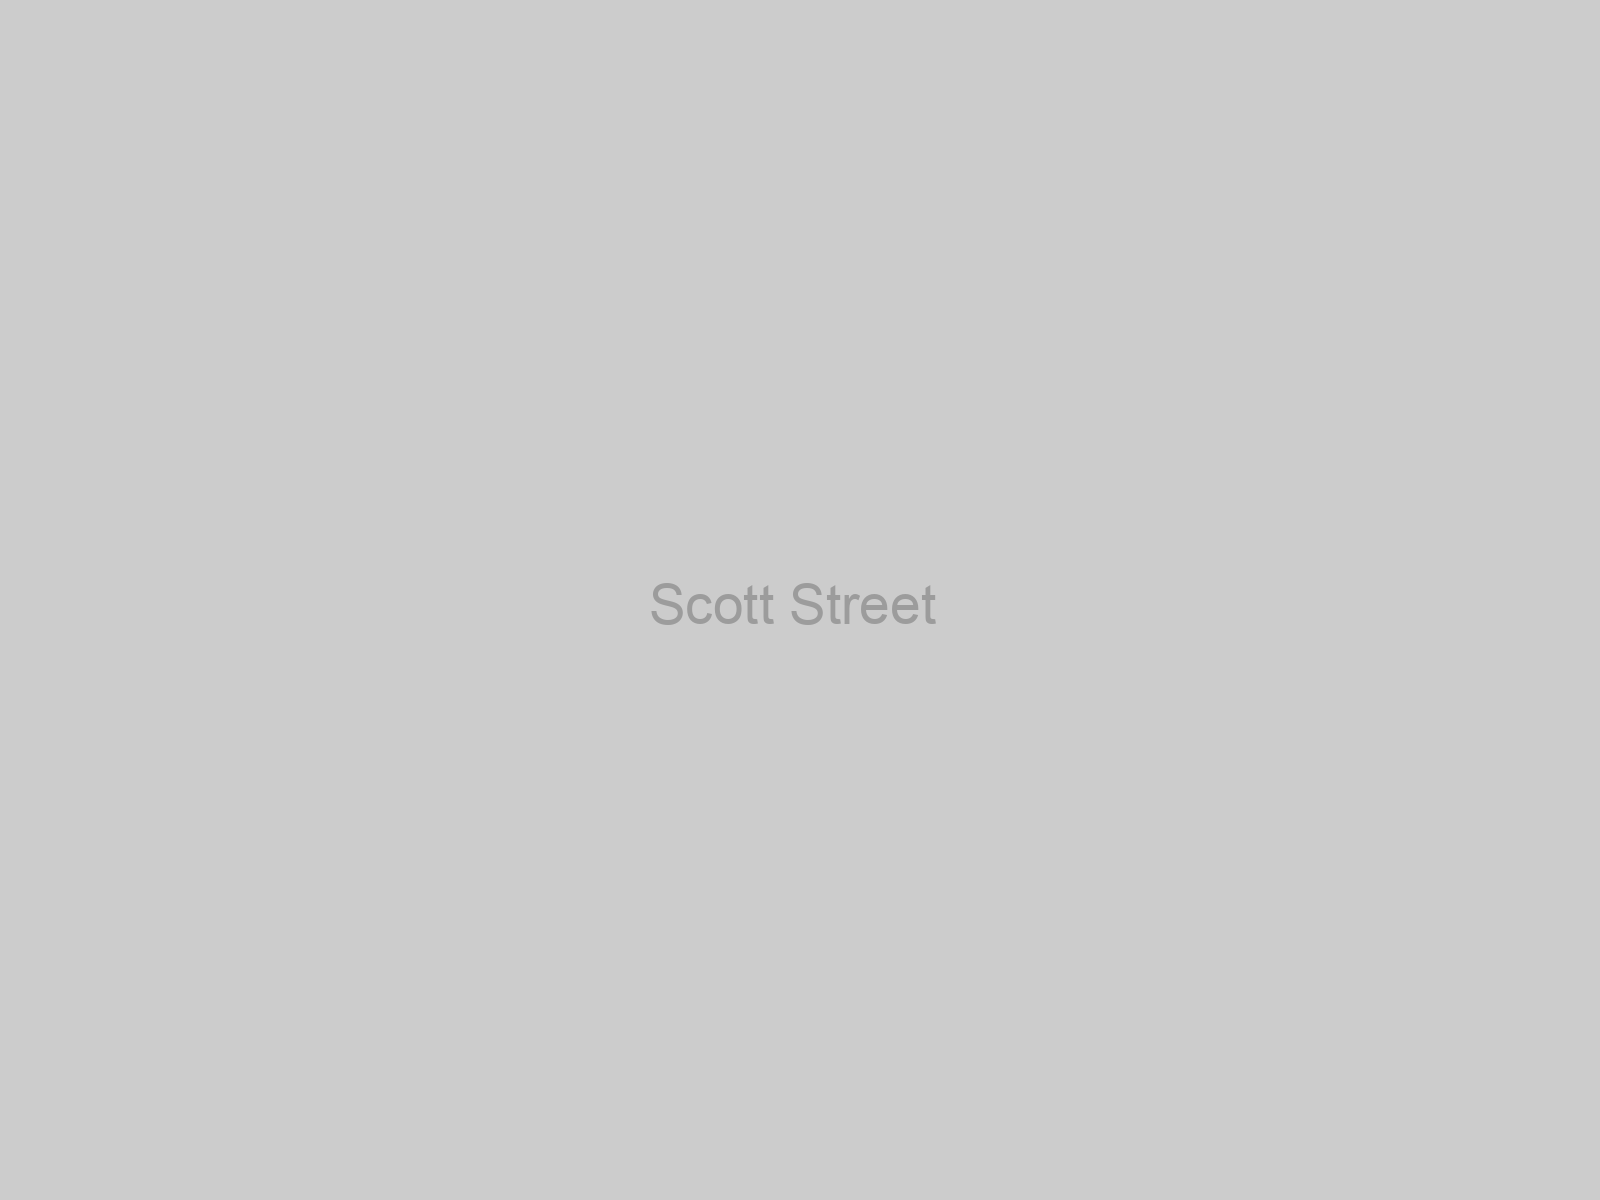 Scott Street & Toole Avenue Intersection Improvements